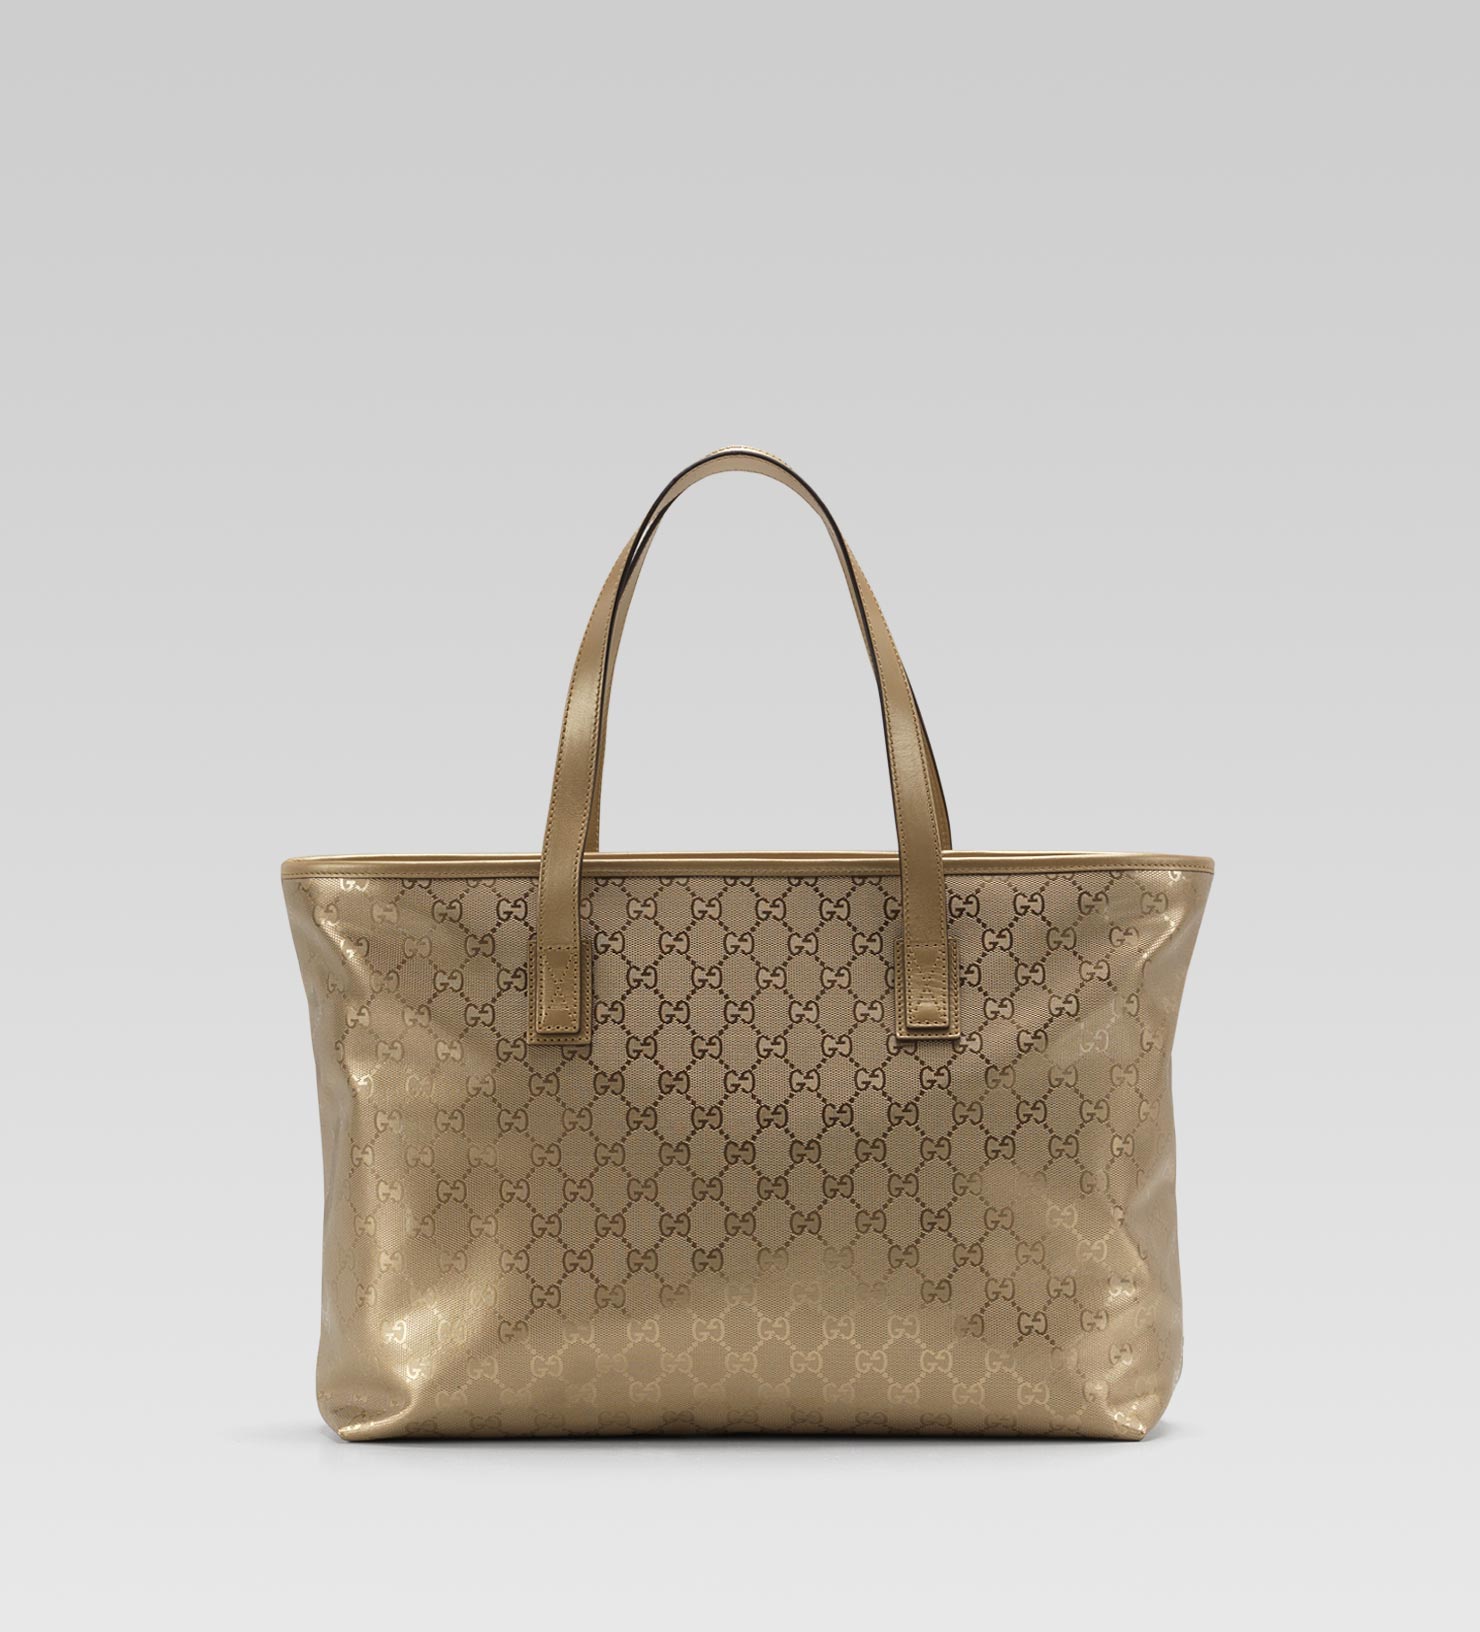 Gucci Tote Bag in Metallic for Men - Lyst